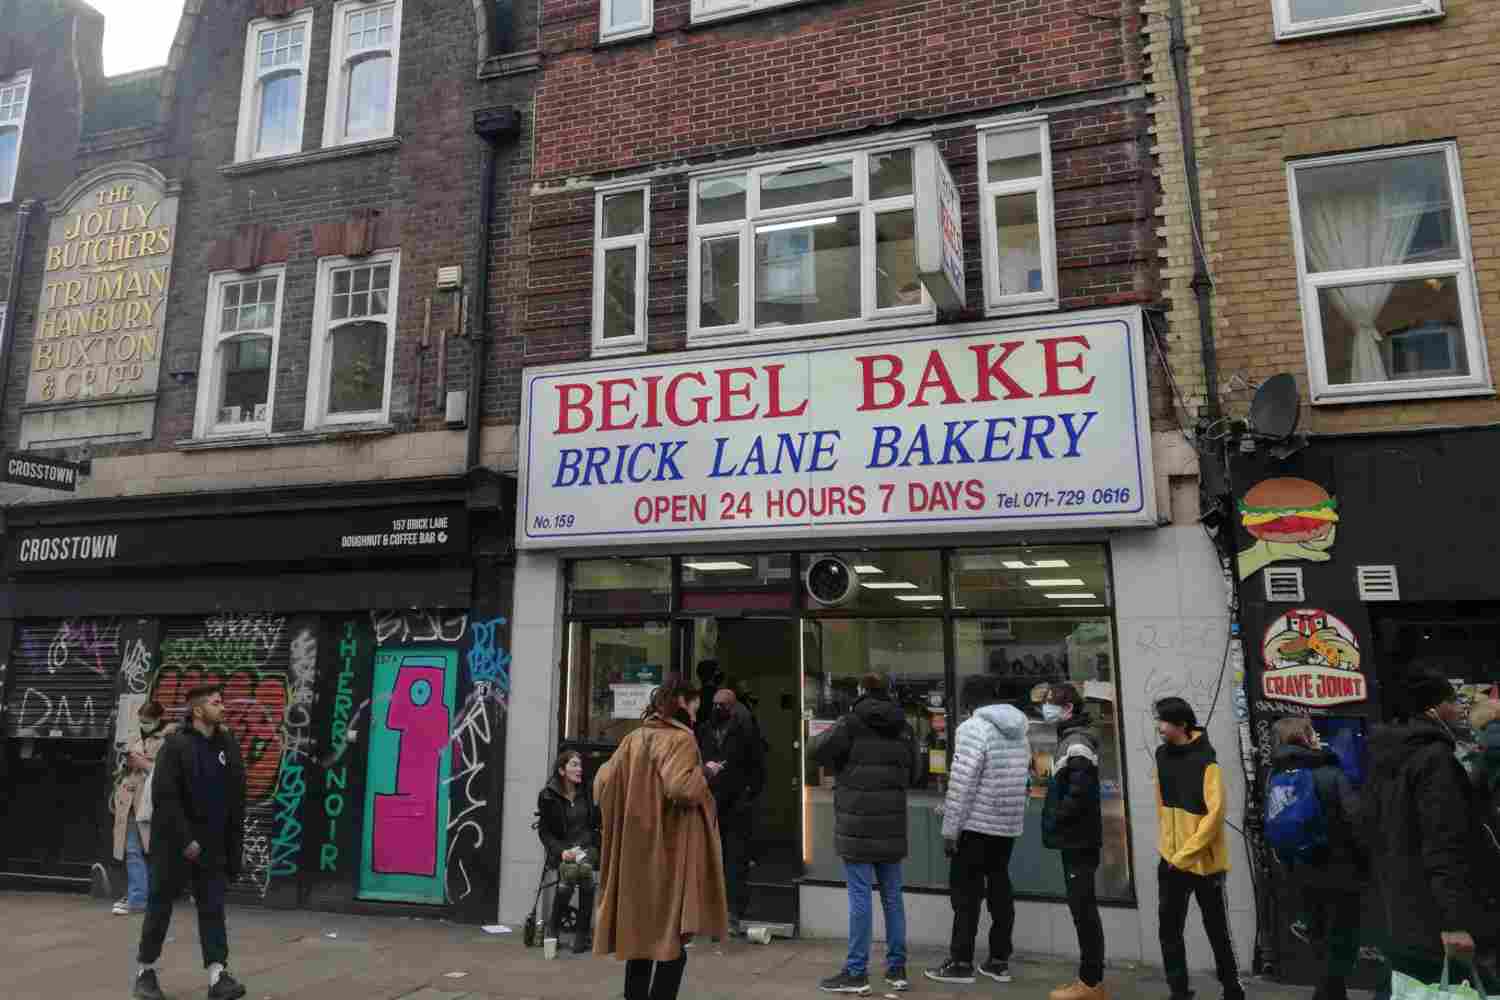 Queue outside Beigel Bake on Brick Lane, East London